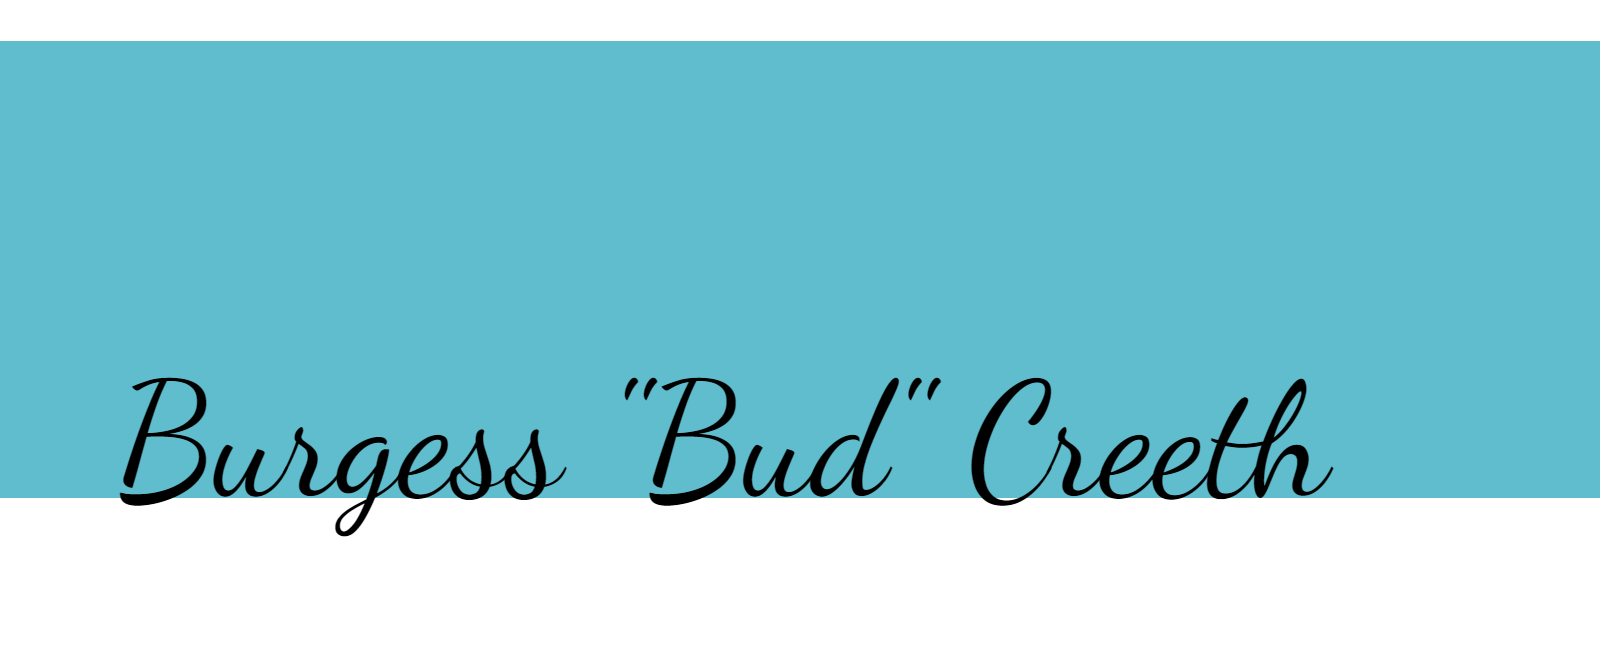 Burgess "Bud" Creeth